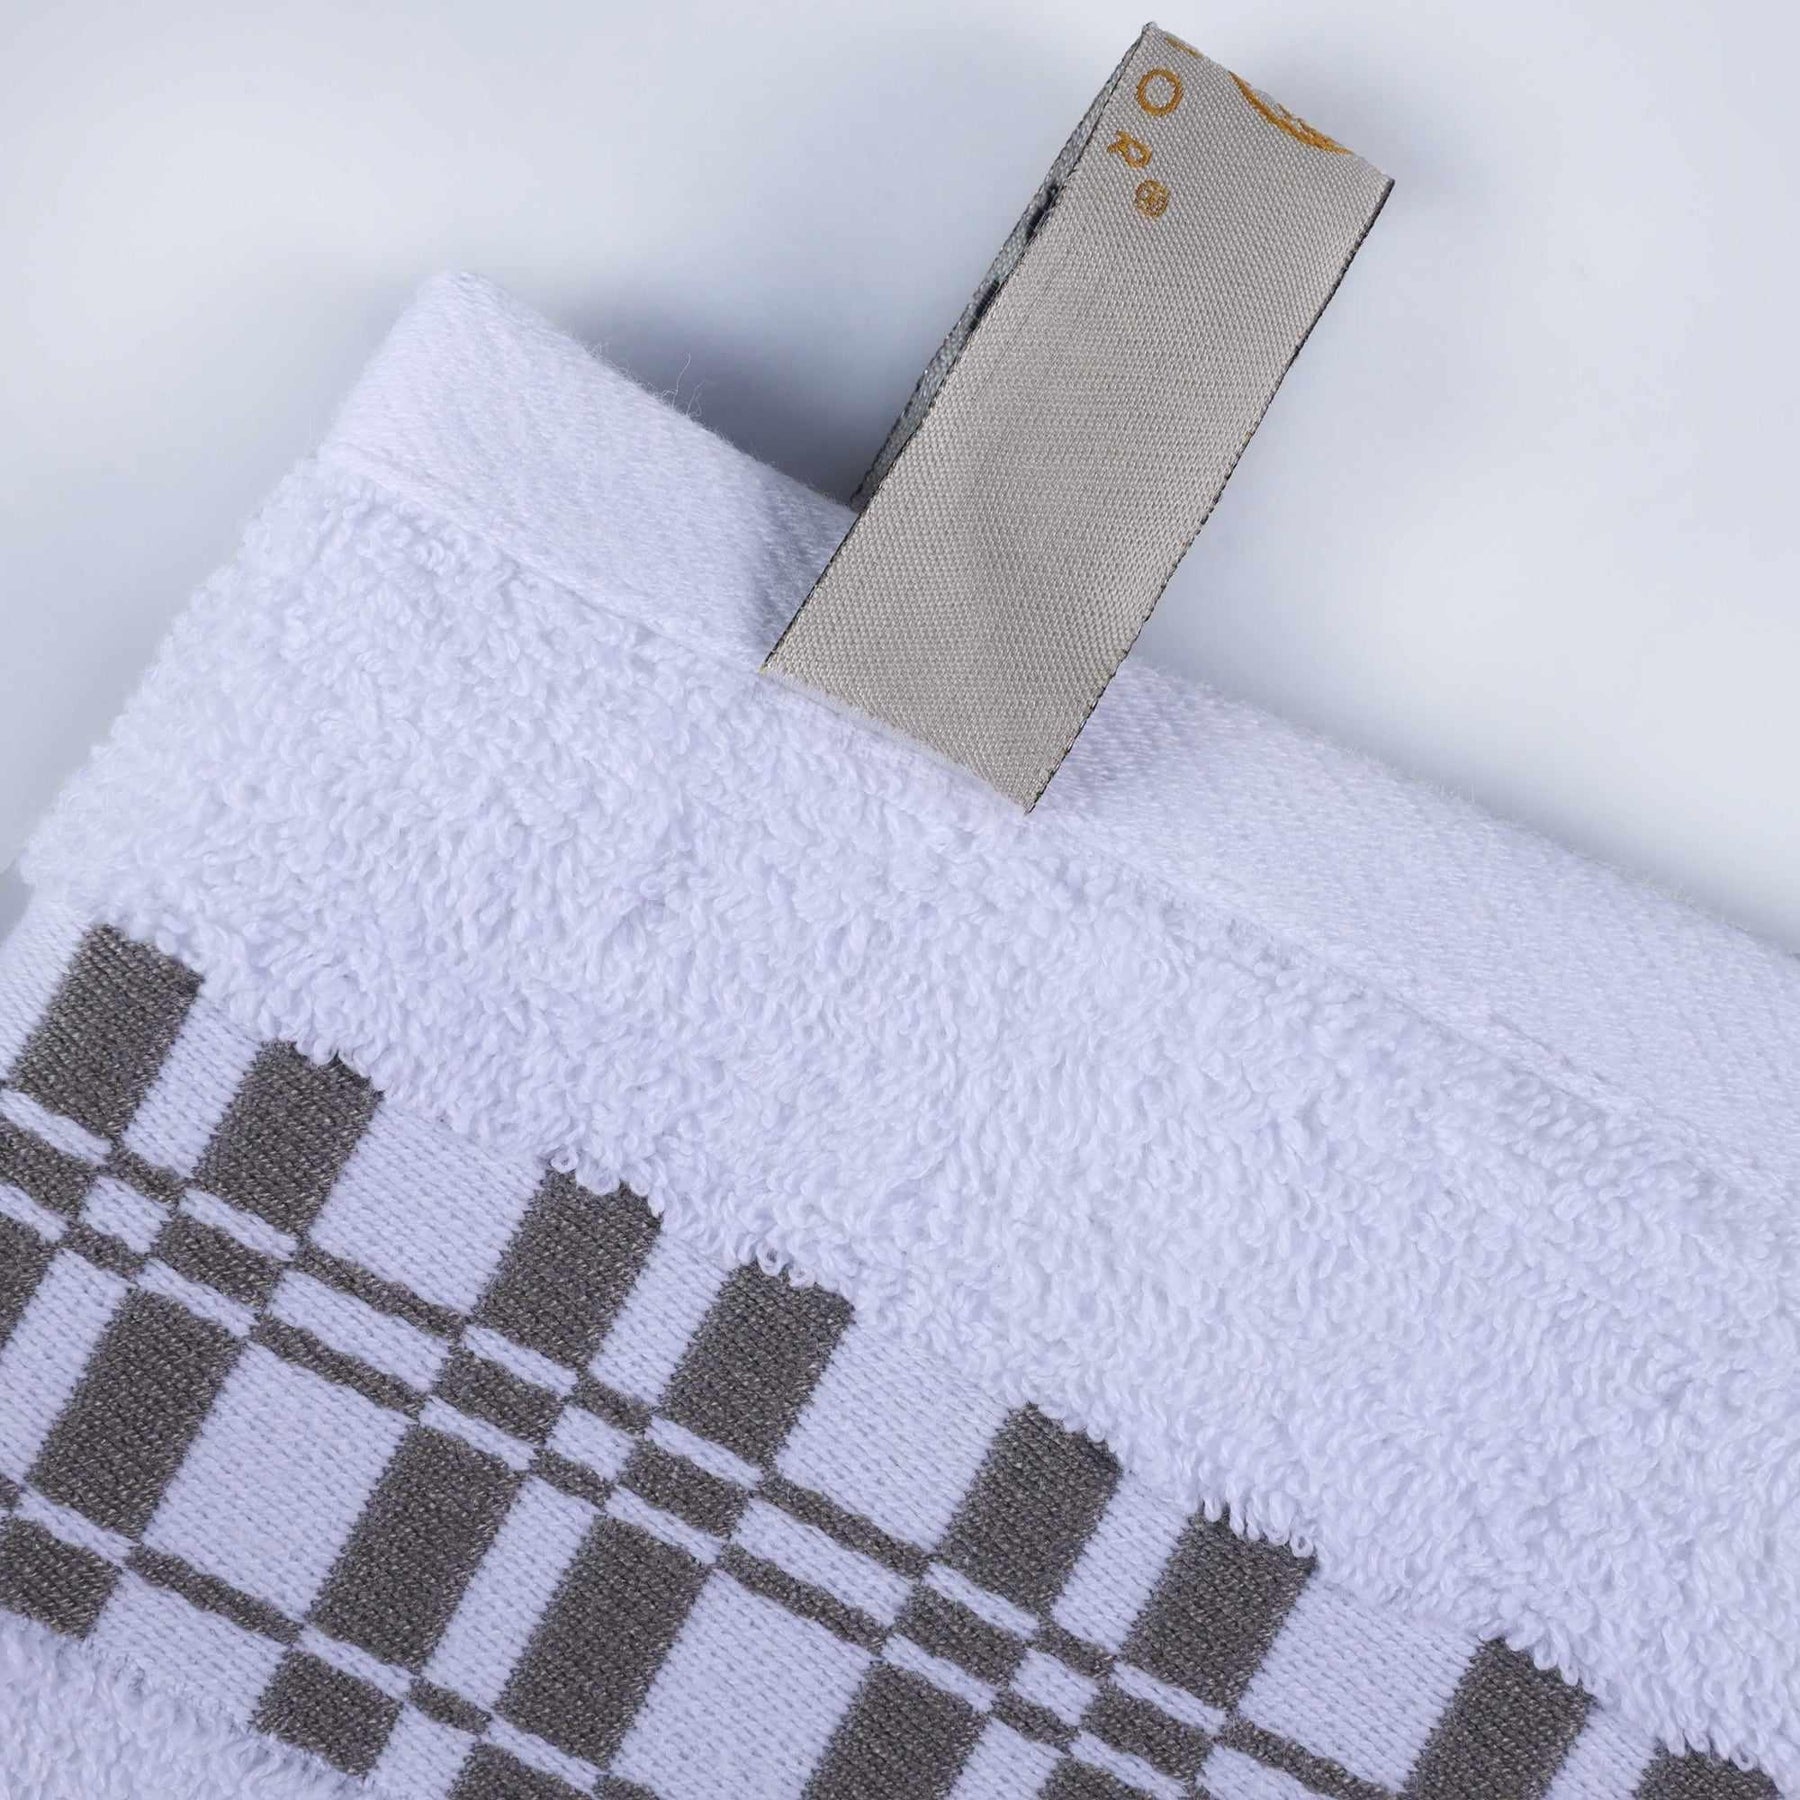  Superior Larissa Cotton 6-Piece Assorted Towel Set with Geometric Embroidered Jacquard Border - White